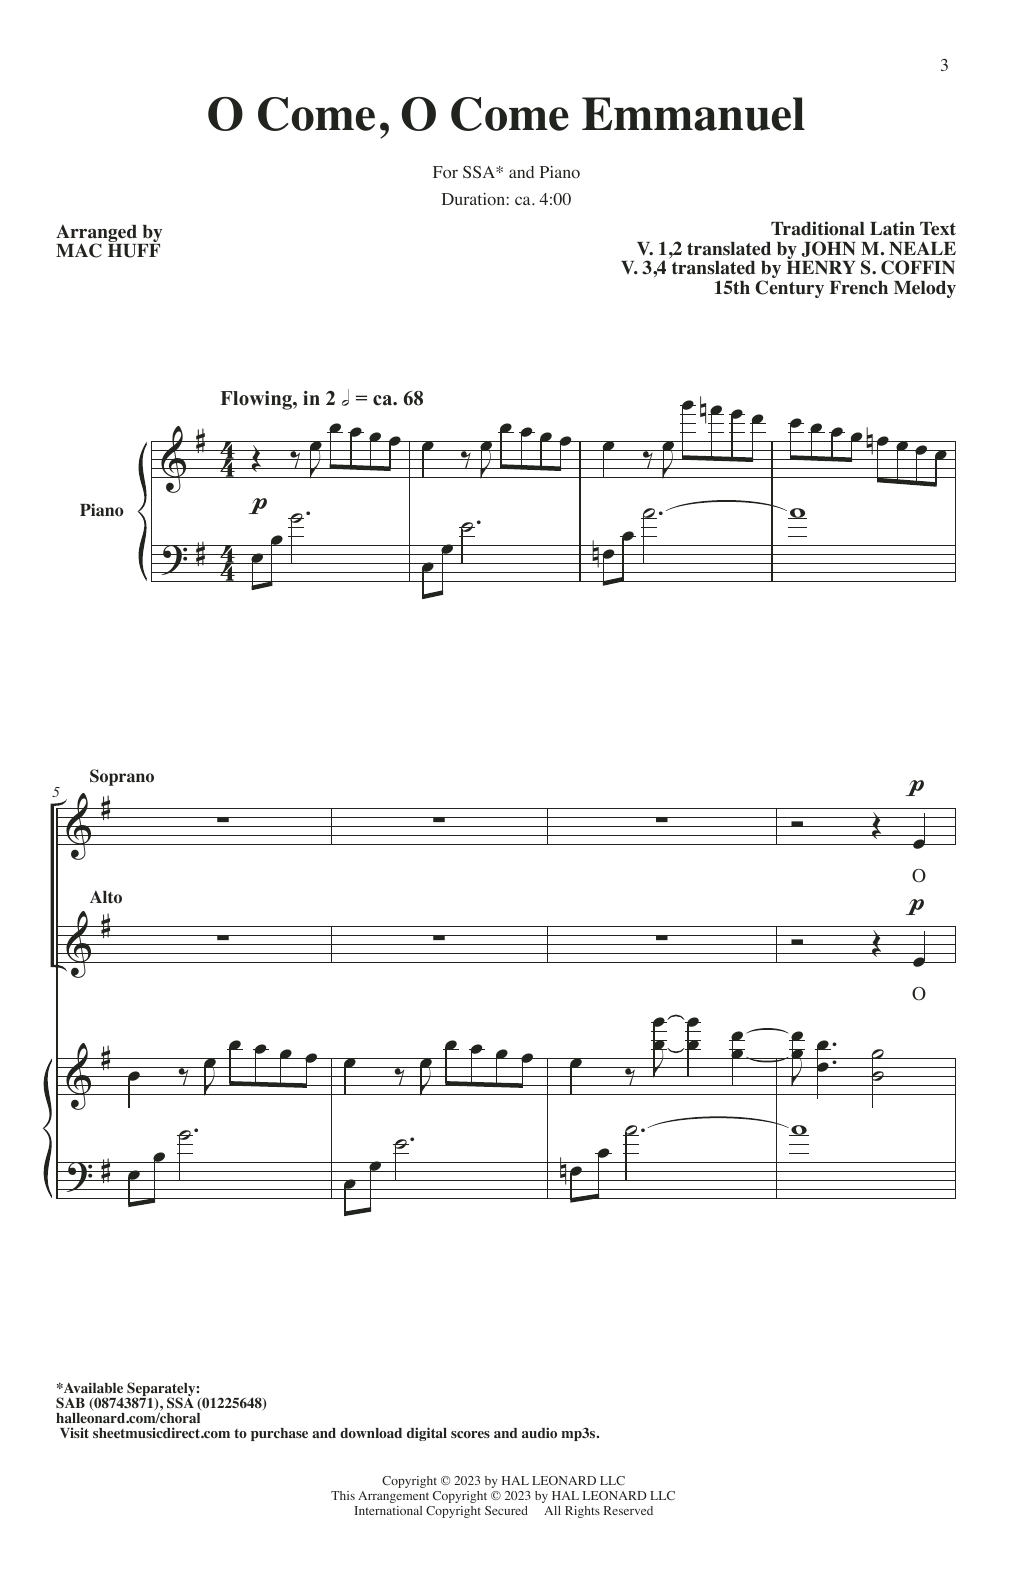 Traditional Carol O Come, O Come, Emmanuel (arr. Mac Huff) sheet music notes and chords arranged for SSA Choir